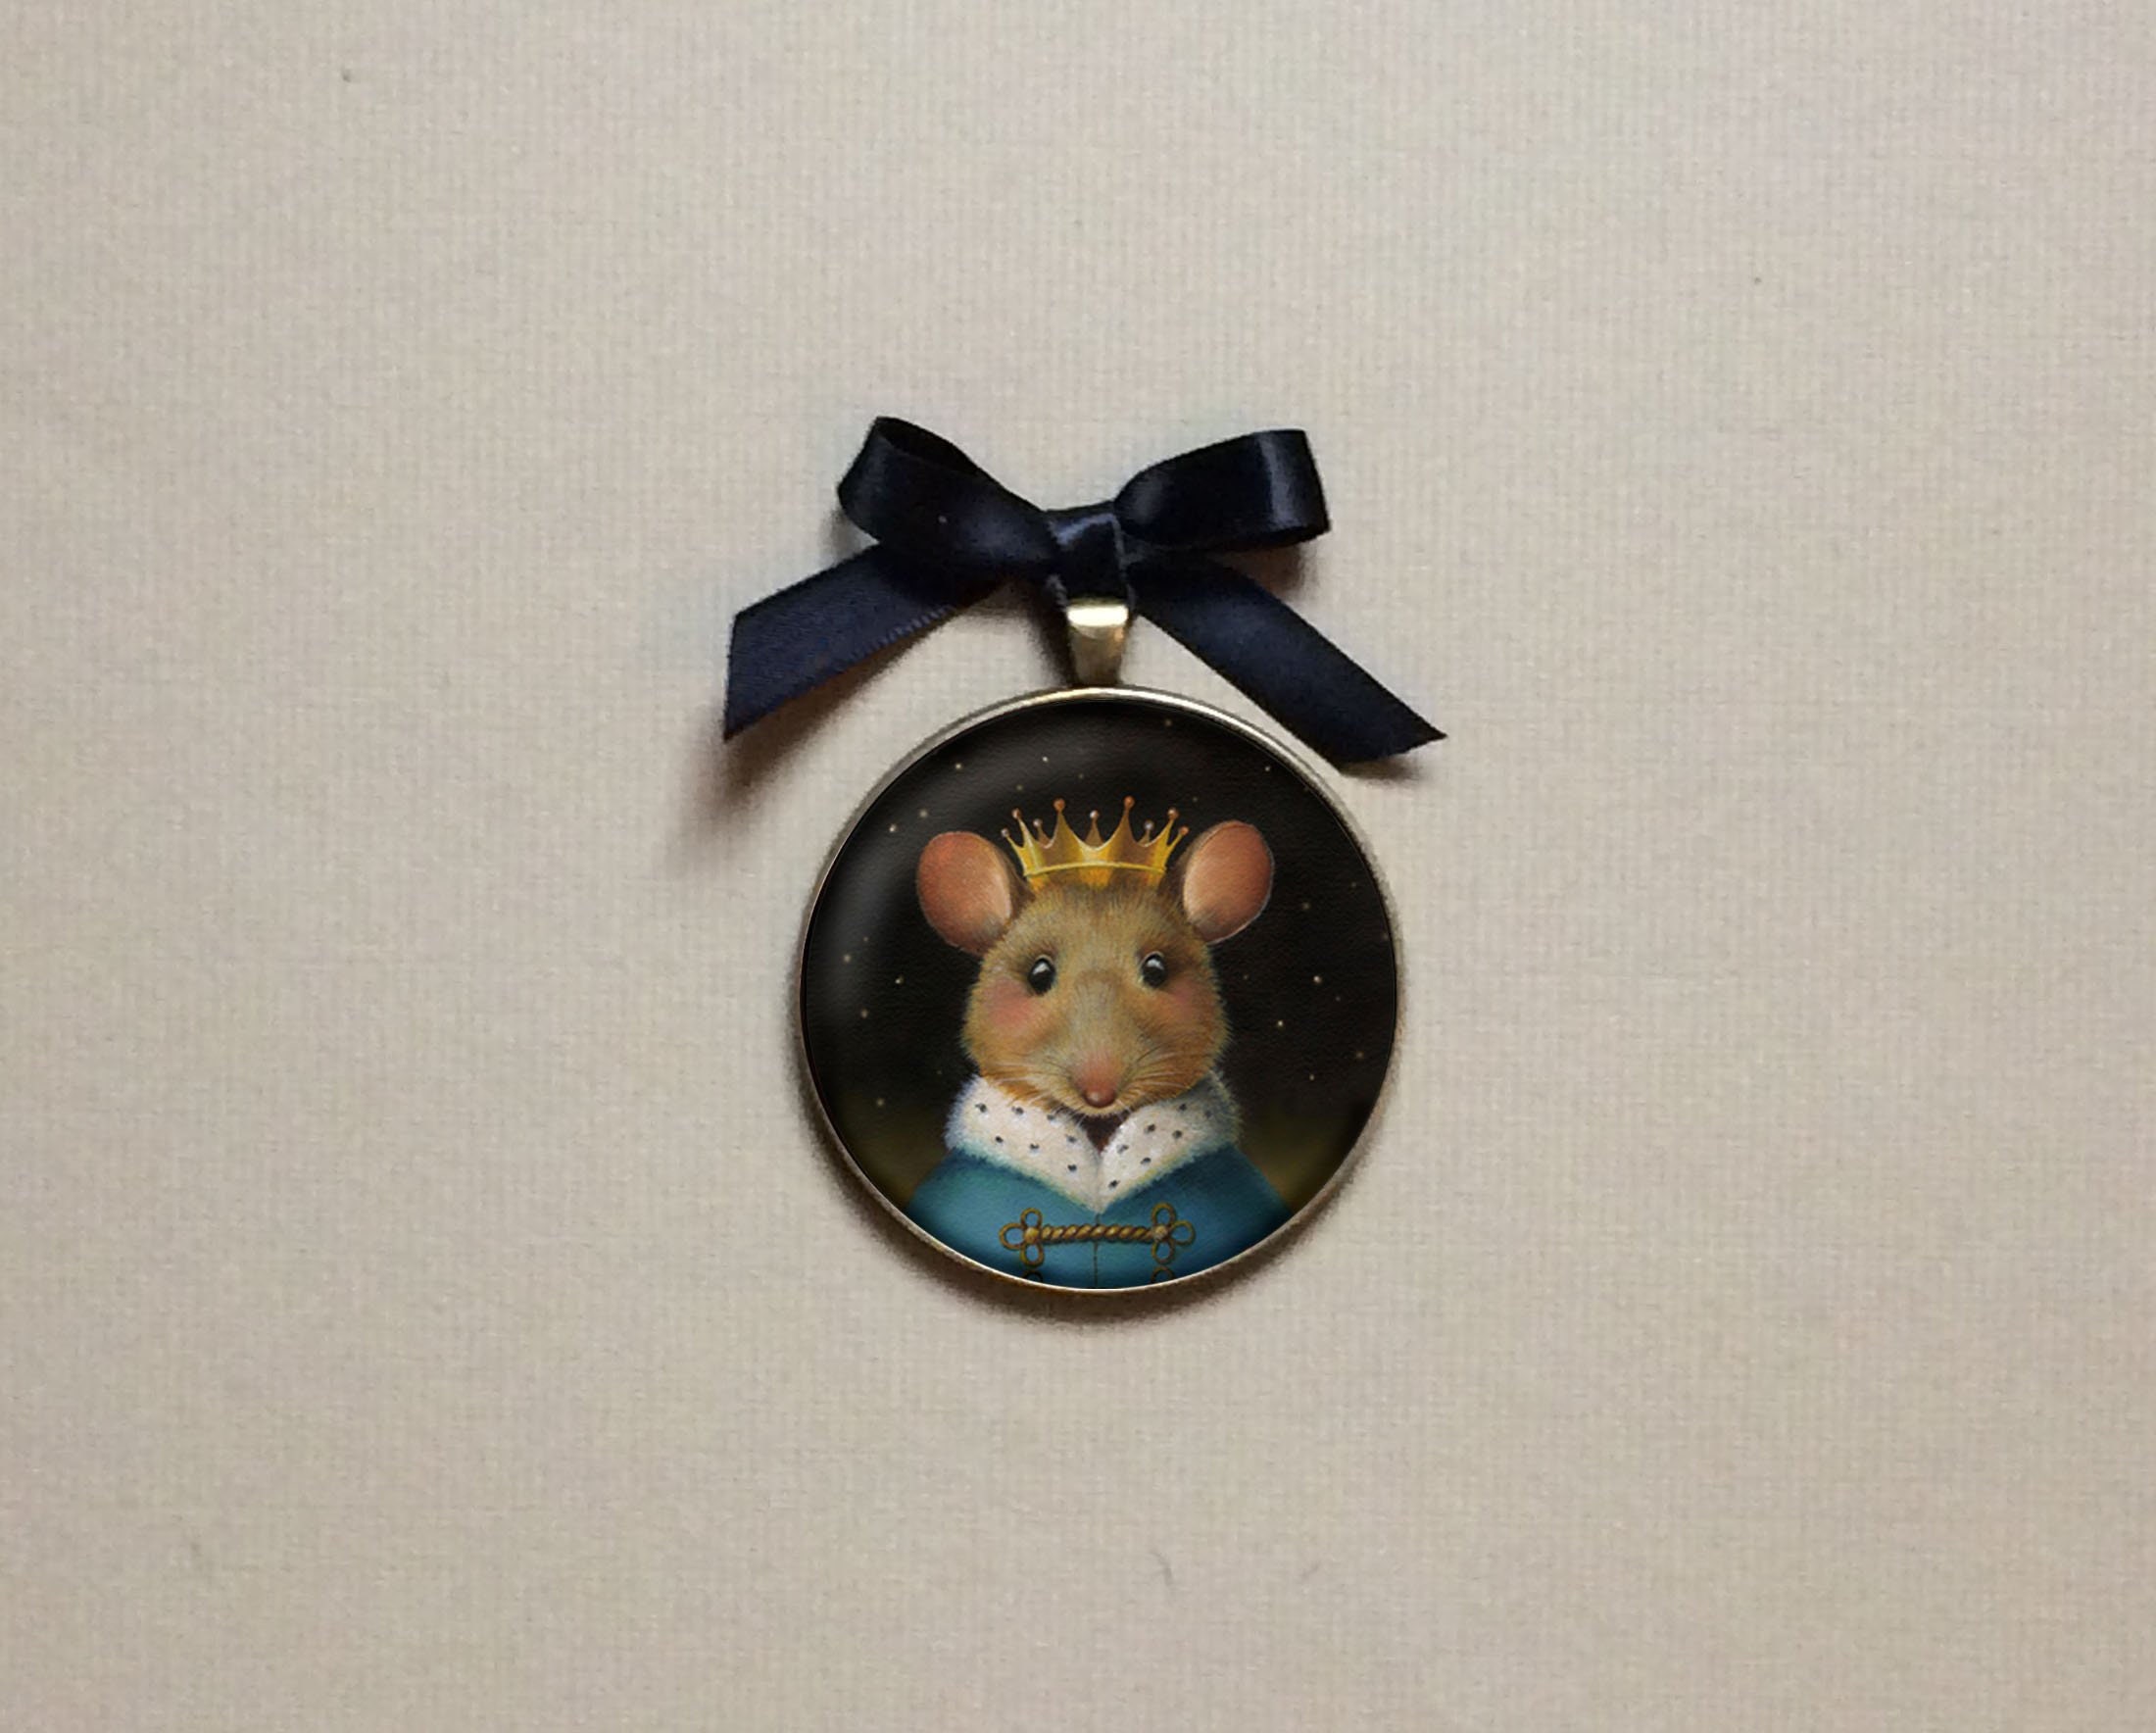 Mouse King Ornament Nutcracker Mouse Ornament Mouse pic